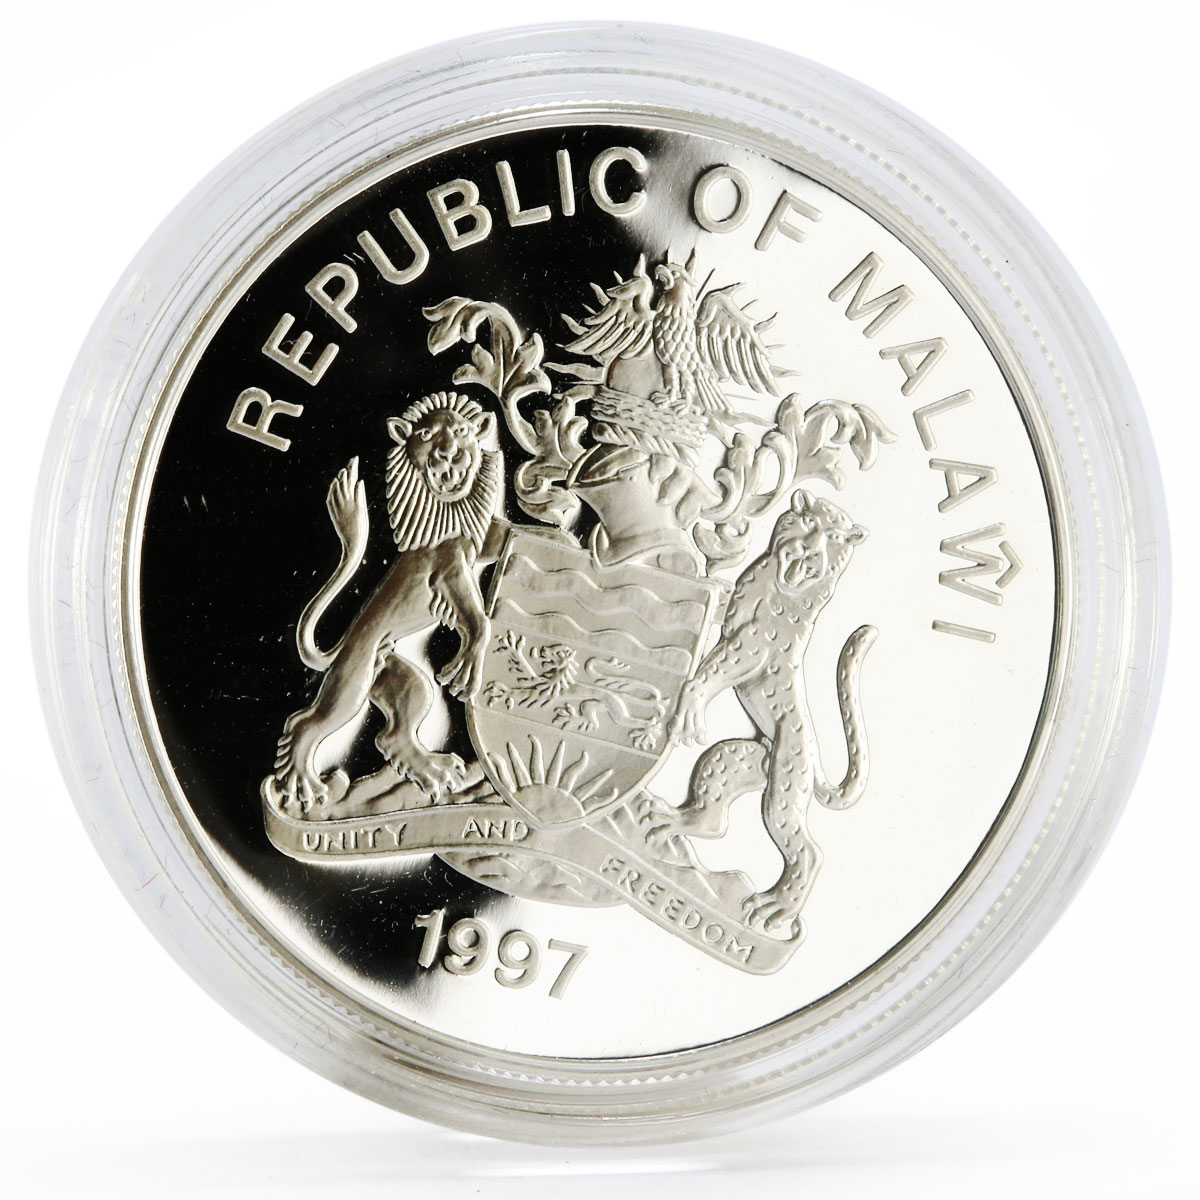 Malawi 20 kwacha Young Girl Guide Elizabeth II Queen Mother silver coin 1997